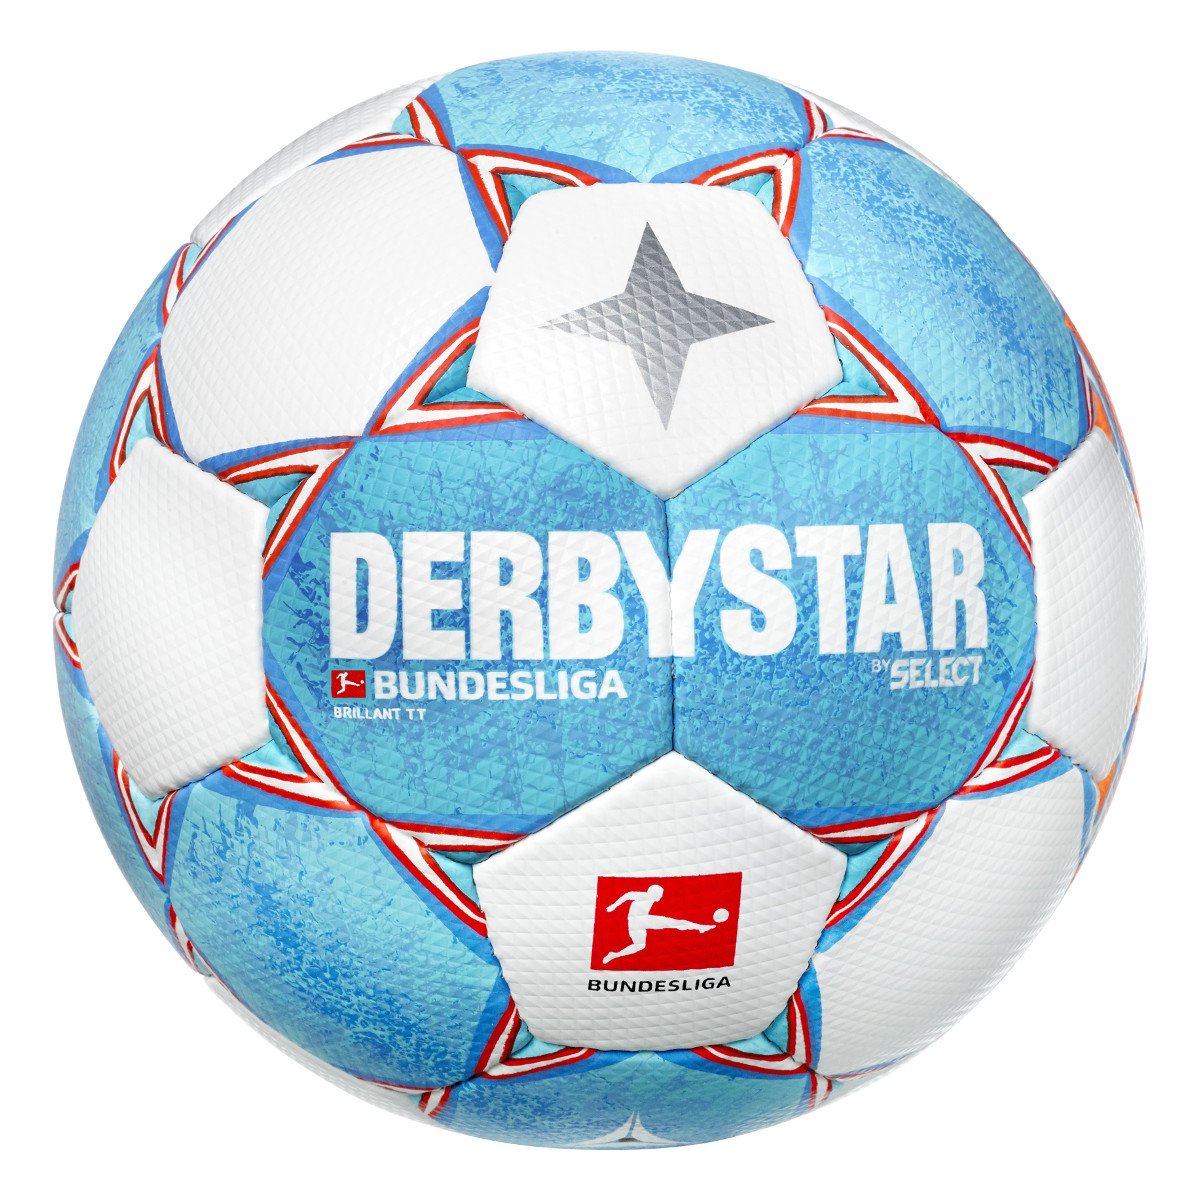 Derbystar Bundesliga Brillant v21 TT Fußball, weiß/orange/blau